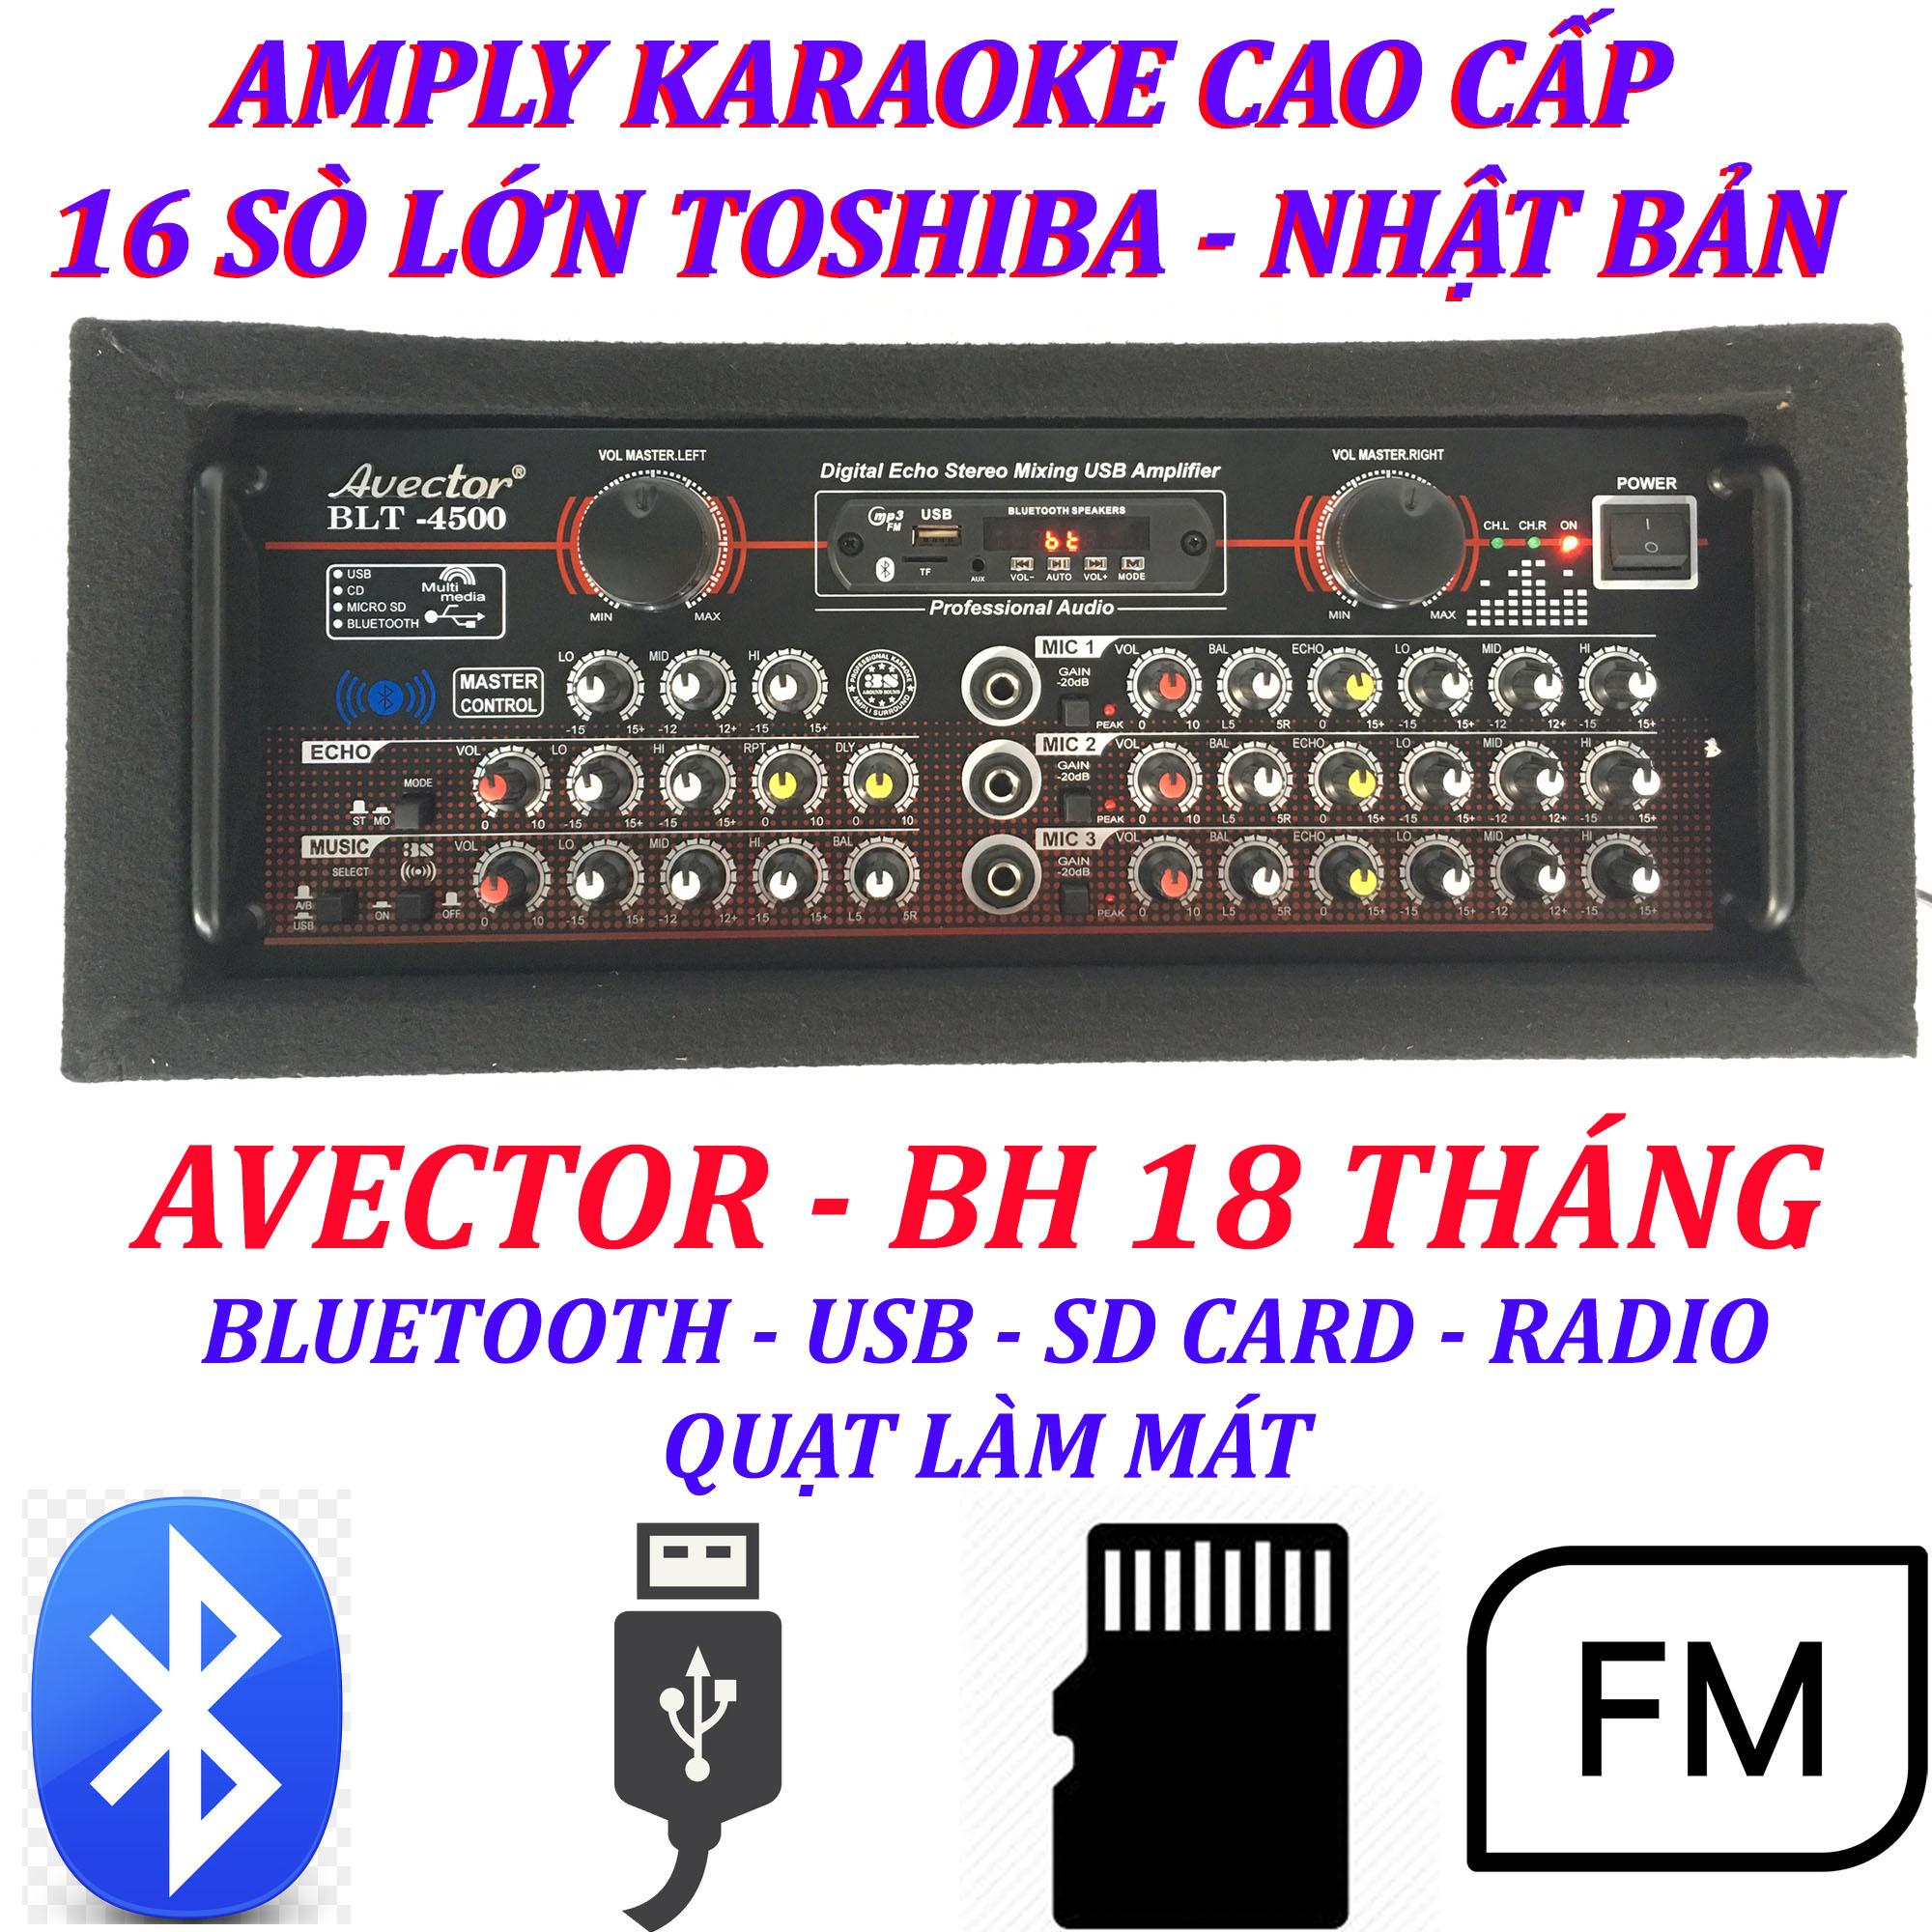 Amply karaoke ampli bluetooth amply nghe nhac amply karaoke hay cao cấp avector 4500